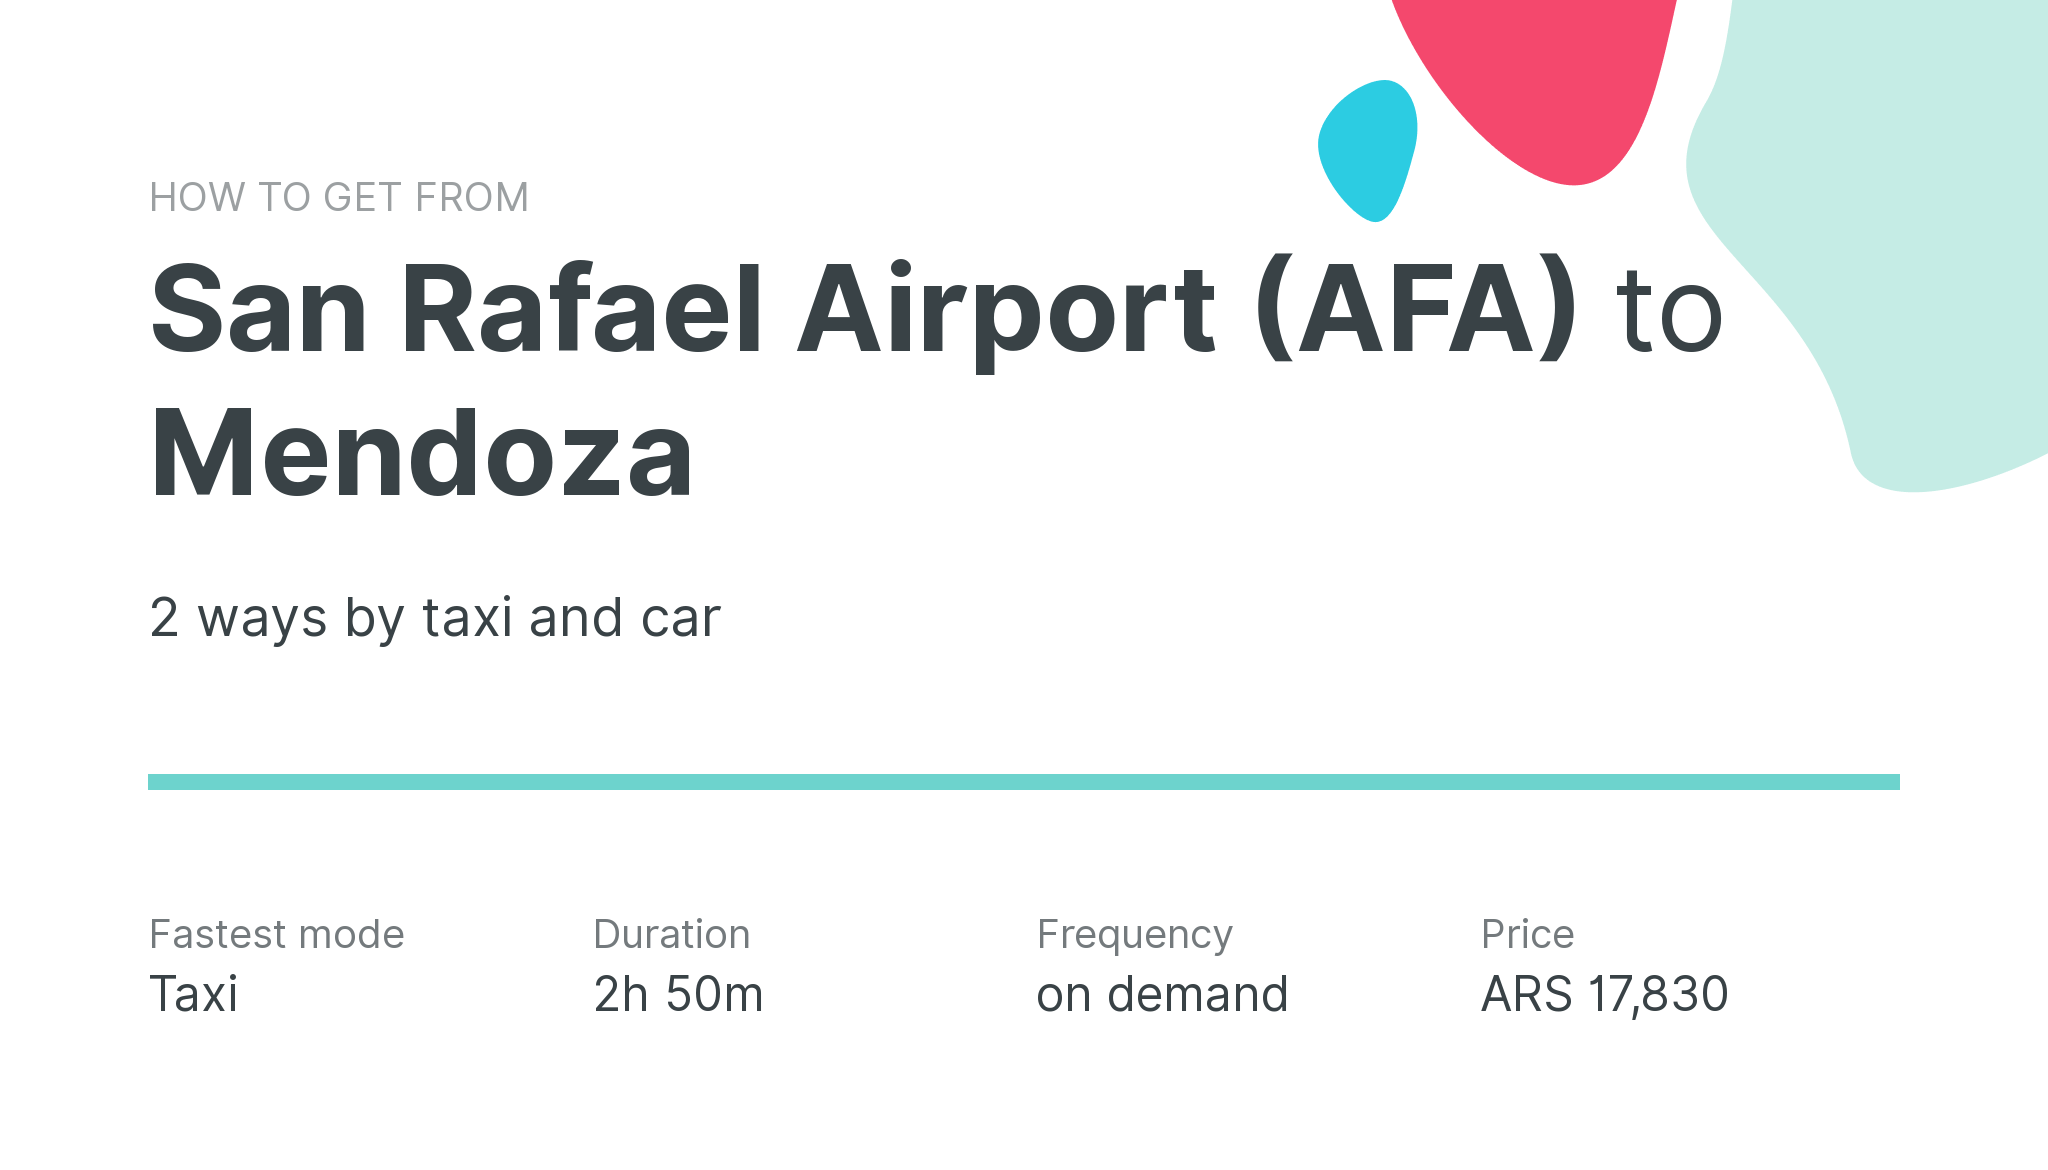 How do I get from San Rafael Airport (AFA) to Mendoza